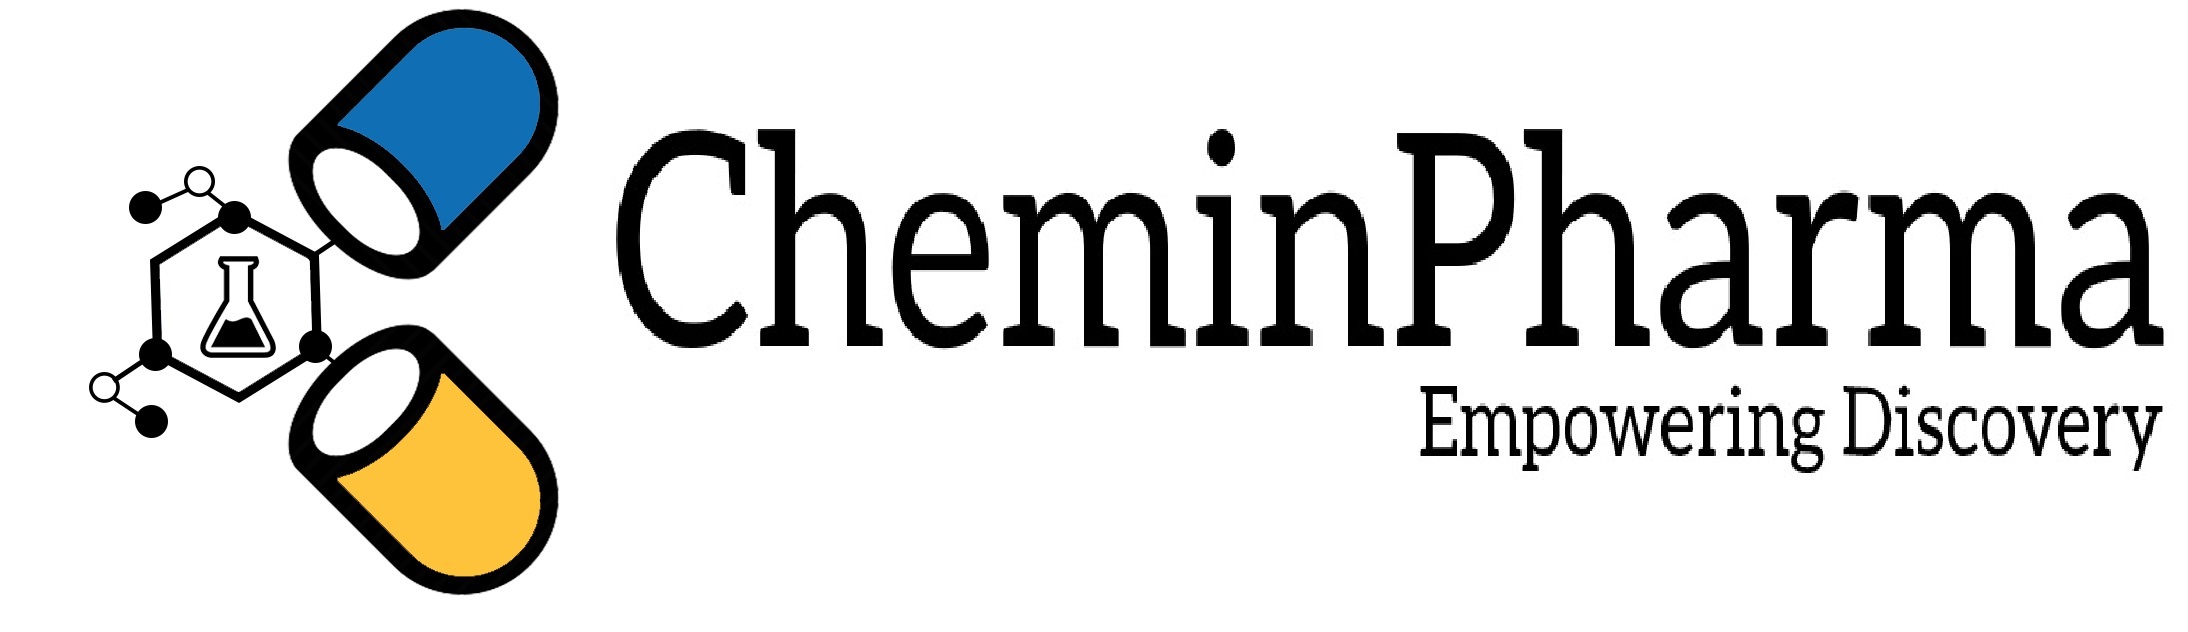 CheminPharma